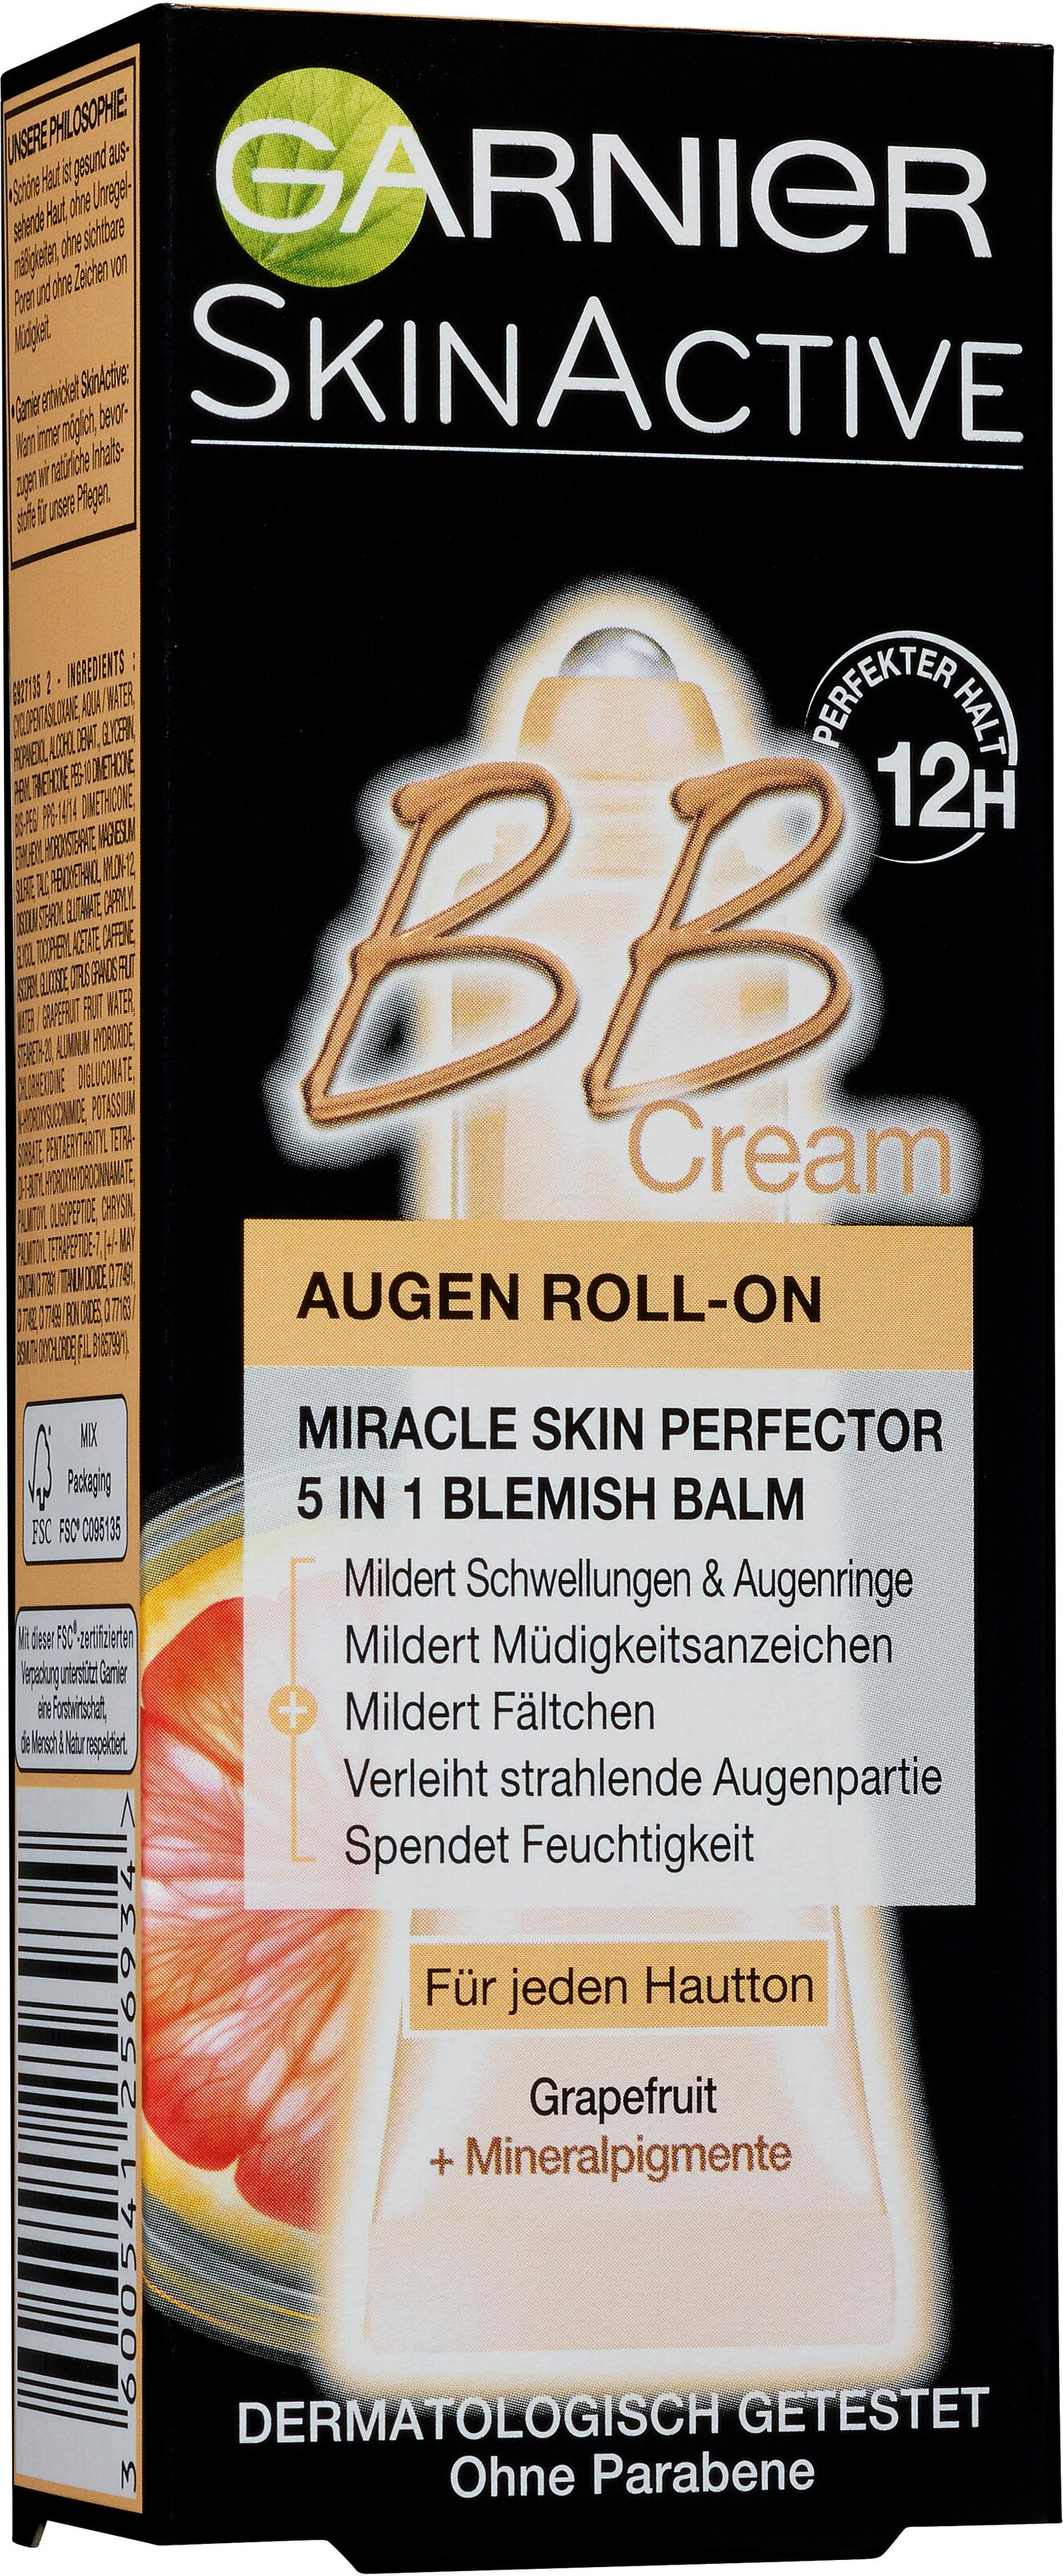 GARNIER BB Cream 5-in-1 Miracle Skin Perfector in 